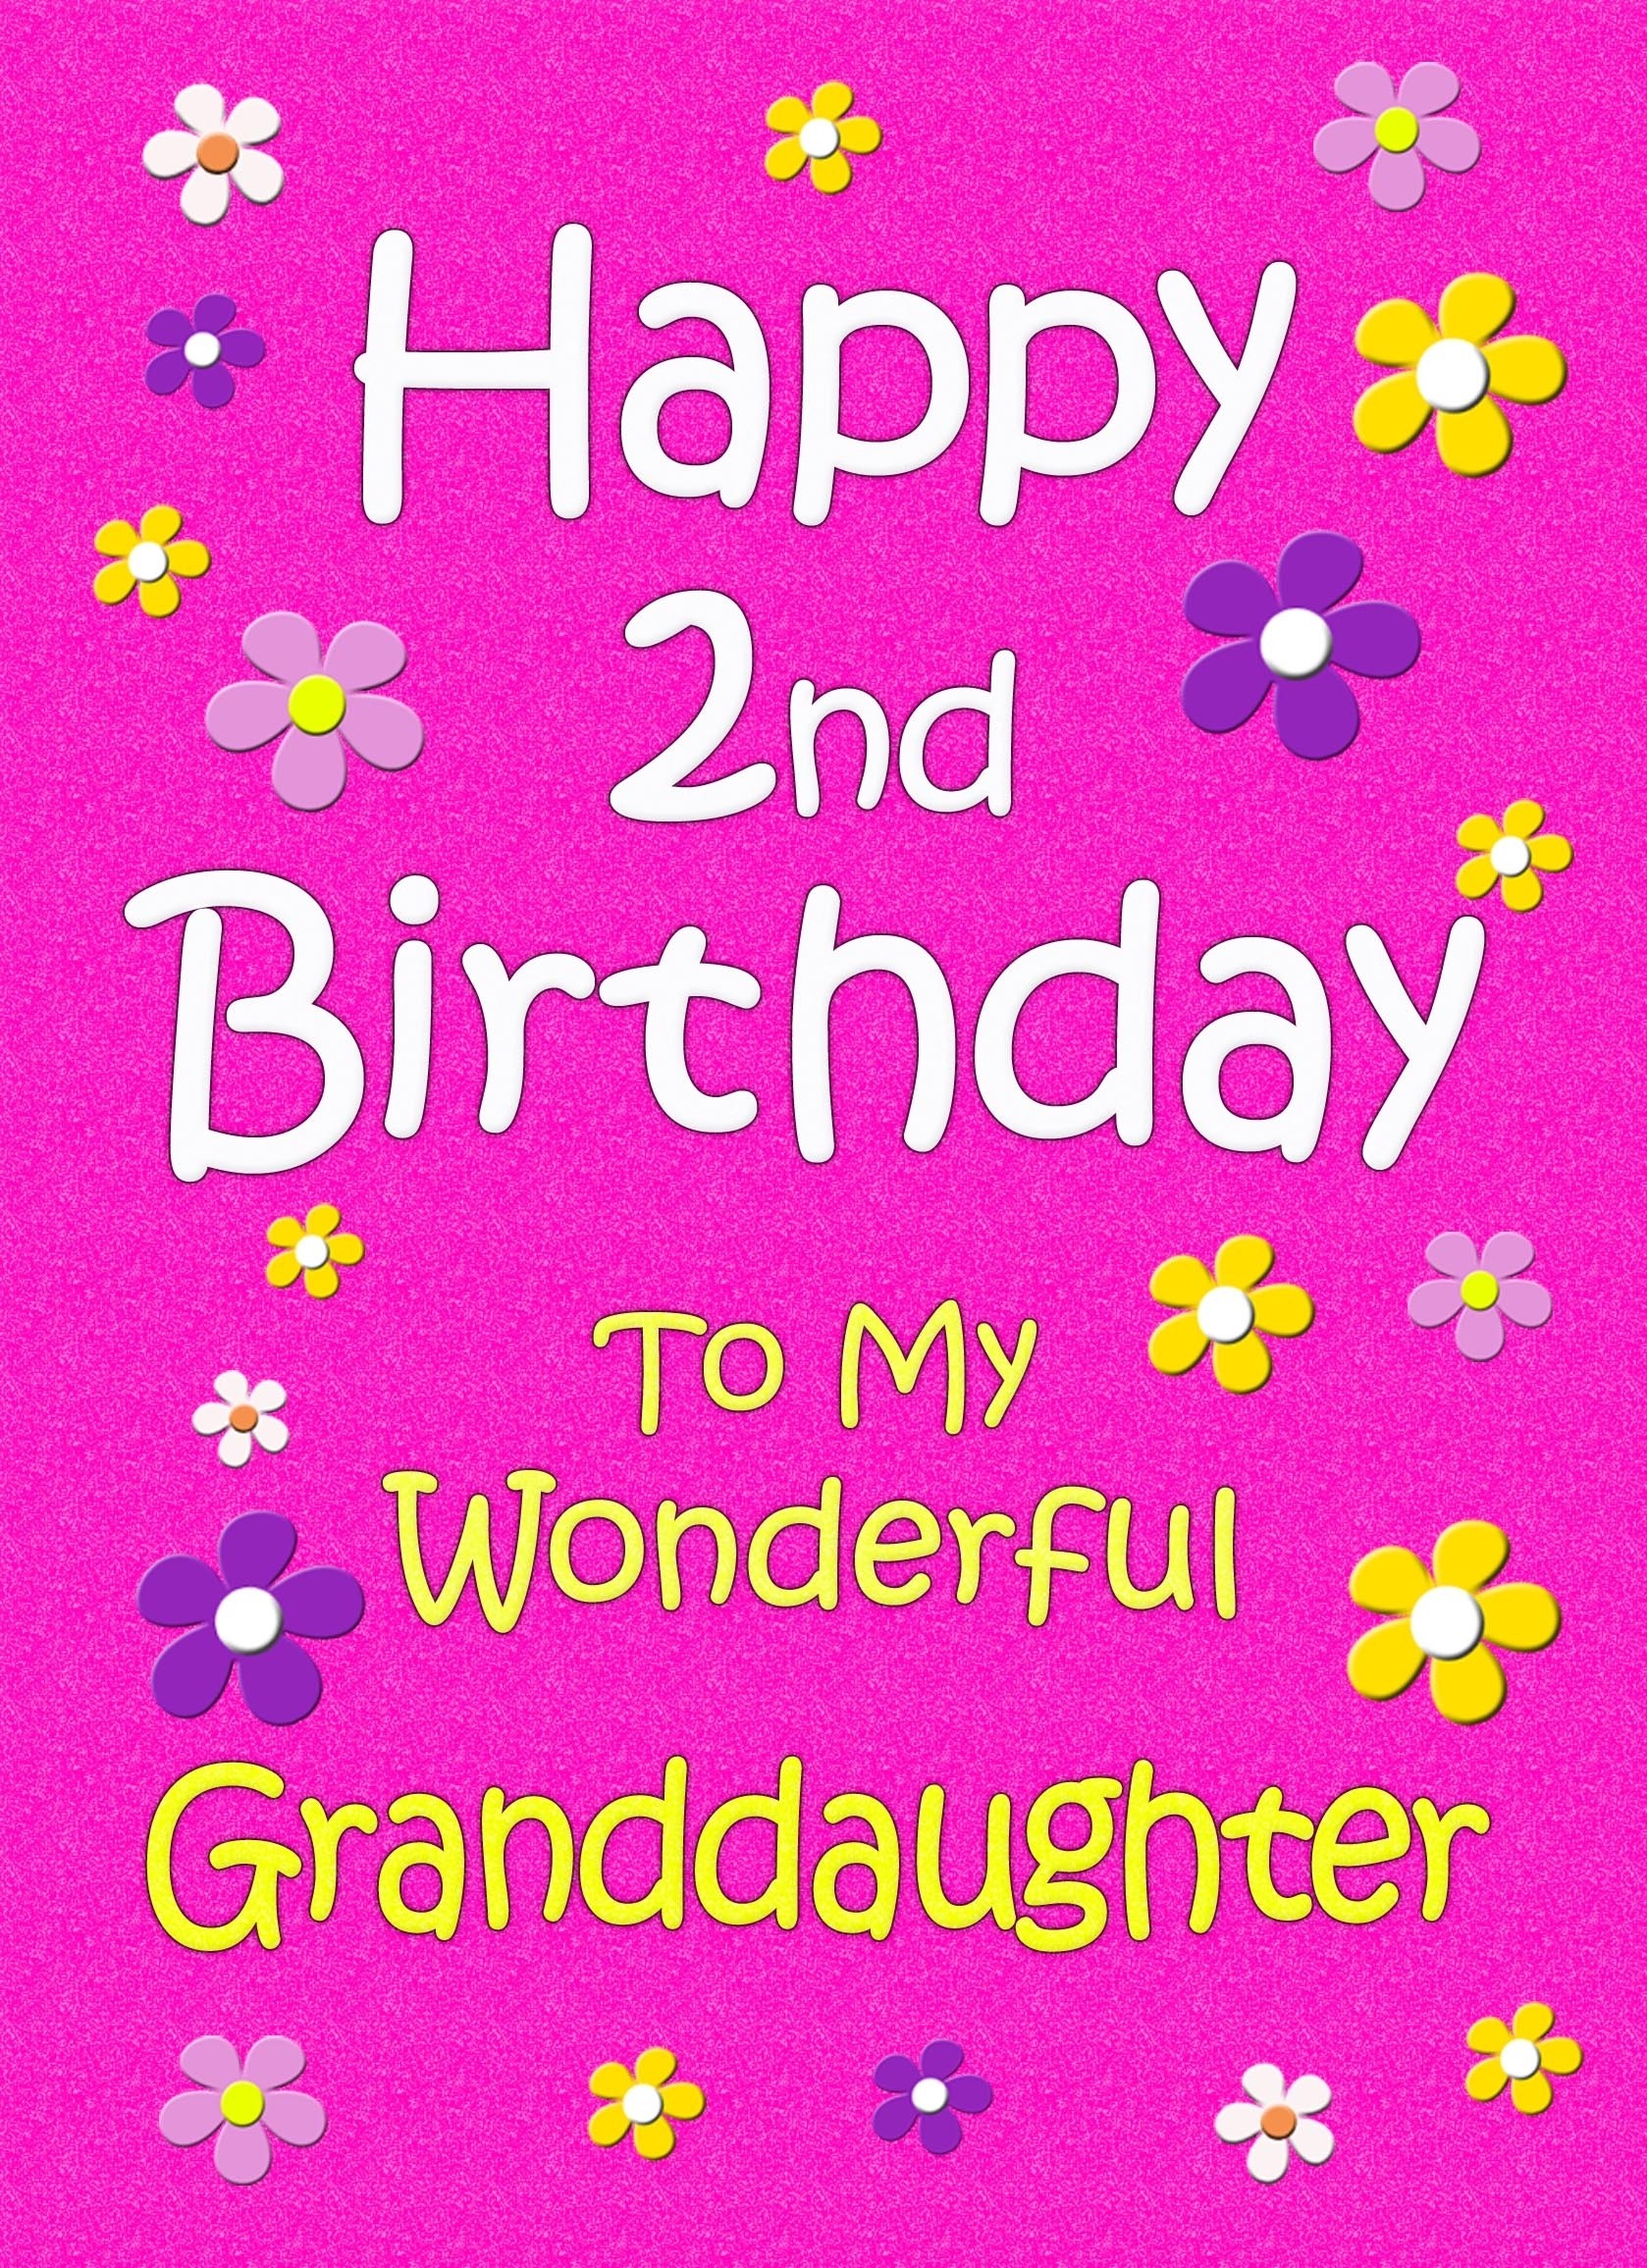 Granddaughter 2nd Birthday Card (Pink)